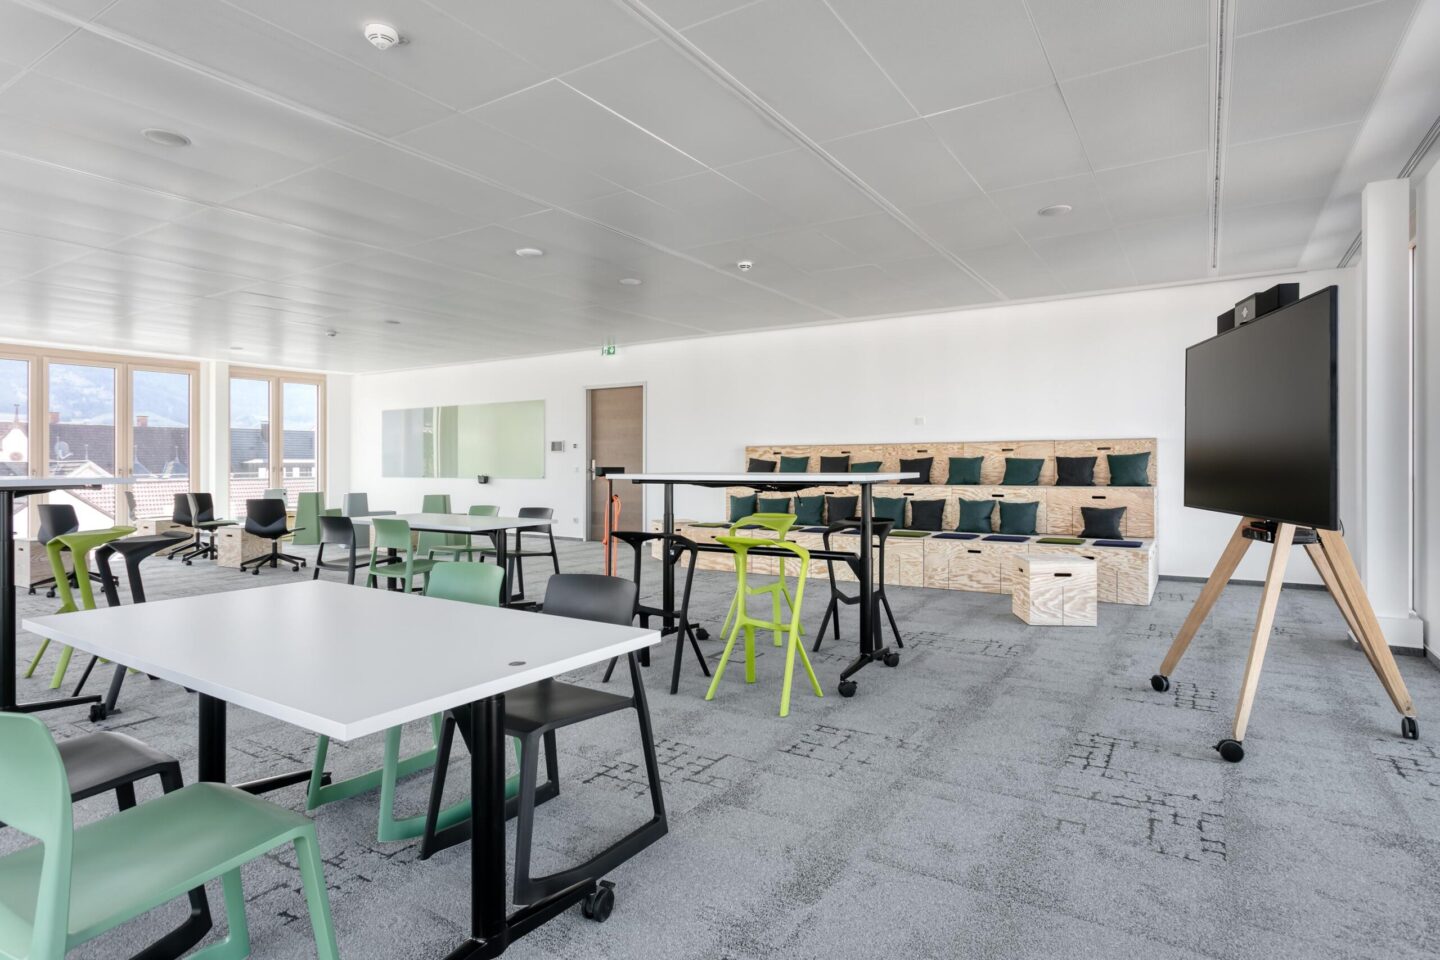 Sparkasse Bühl – Main Office │ modern meeting rooms │ various communication areas